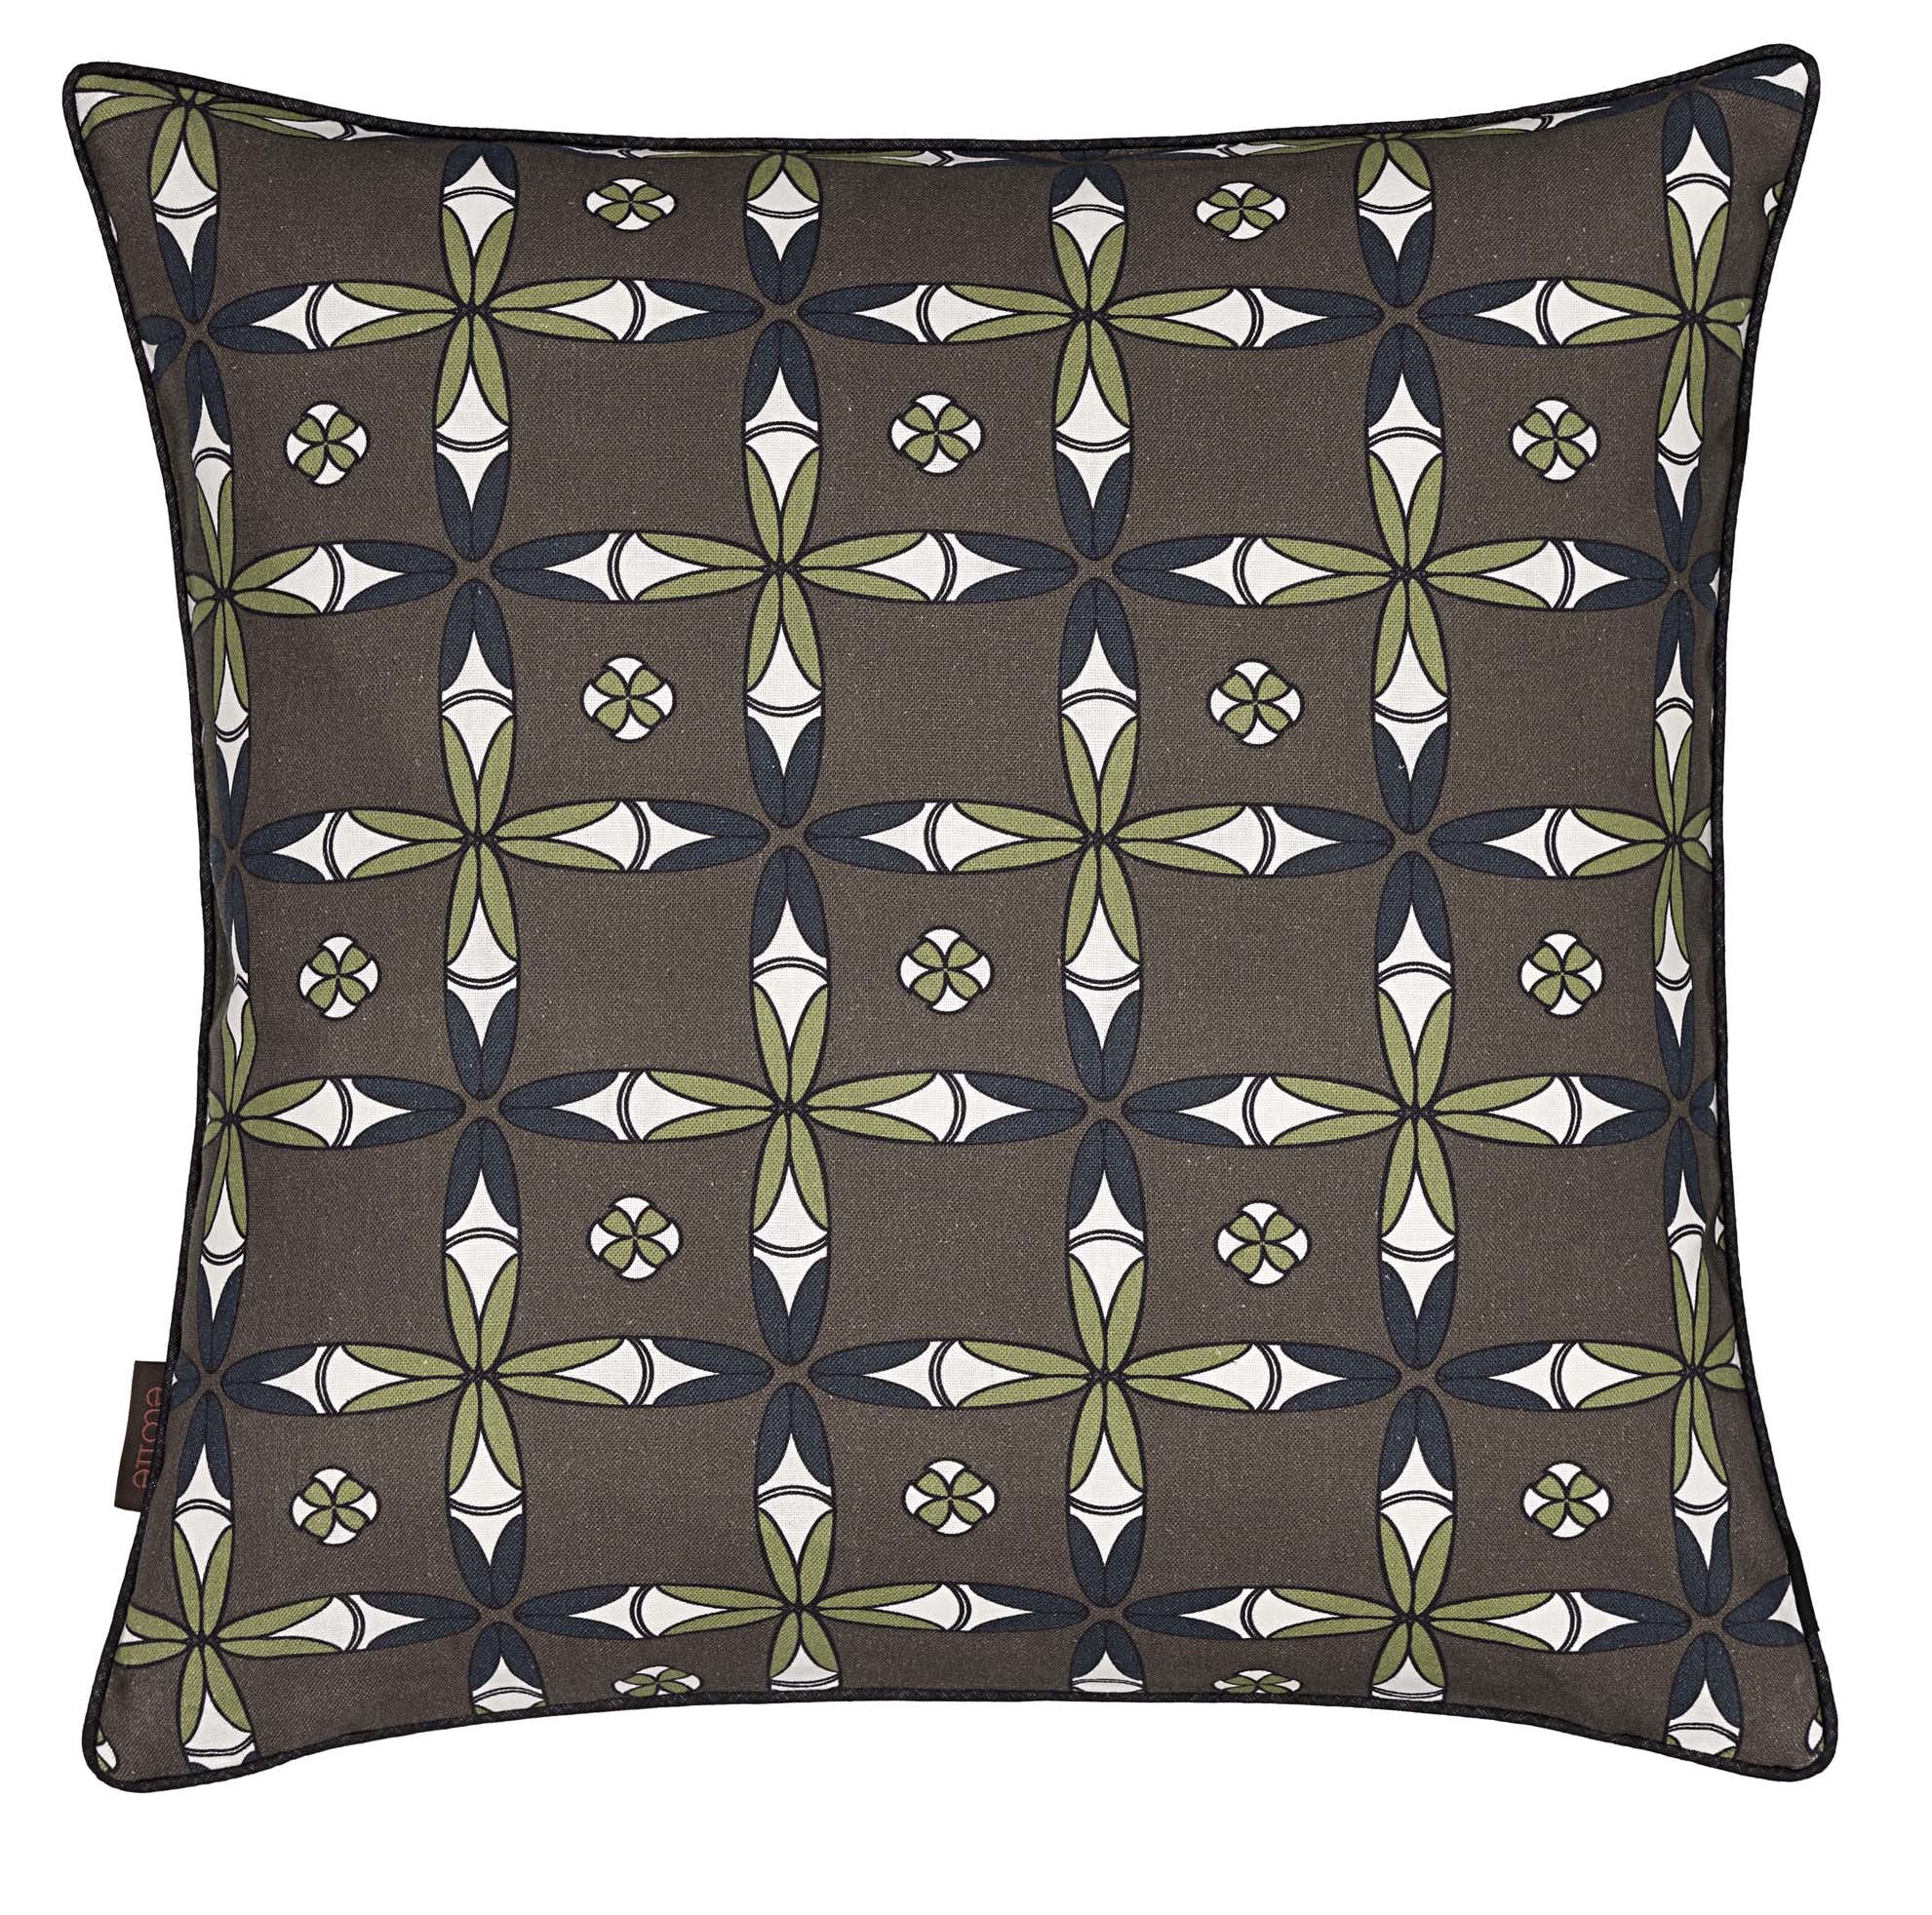 Navajo Ethnic Geometric Pattern Linen Cotton Decorative Throw Pillow in Stone Grey 45x45cm (18x18")